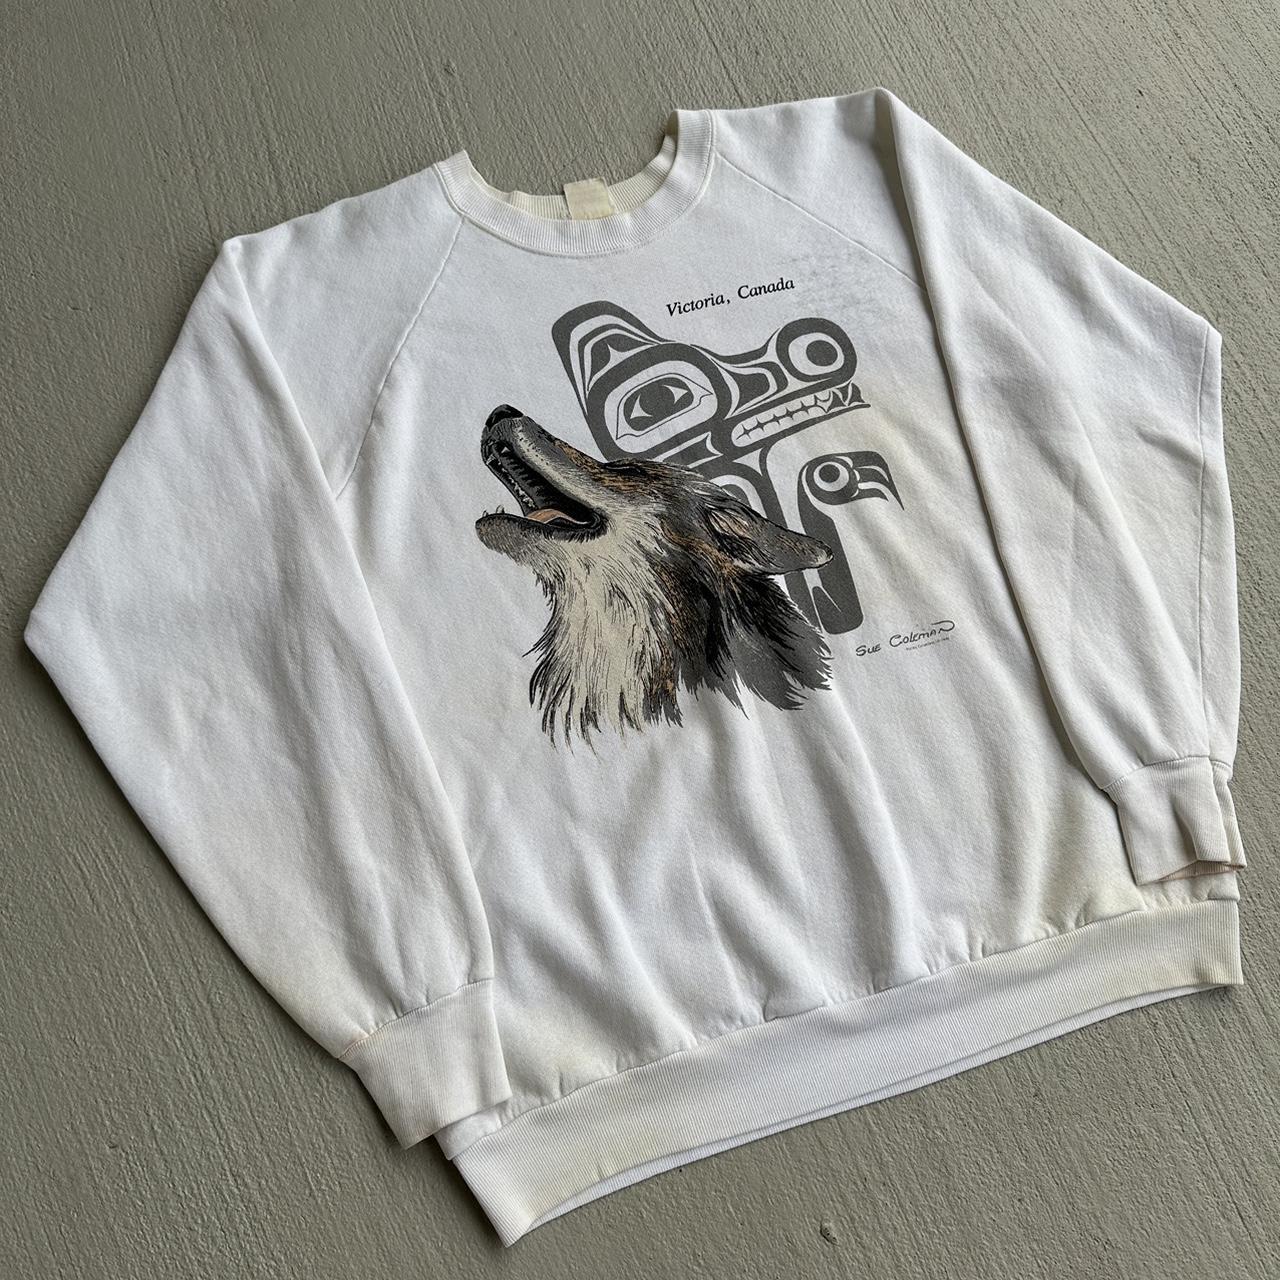 Vintage Fly Fishing Sweatshirt XL Nature Wildlife - Depop